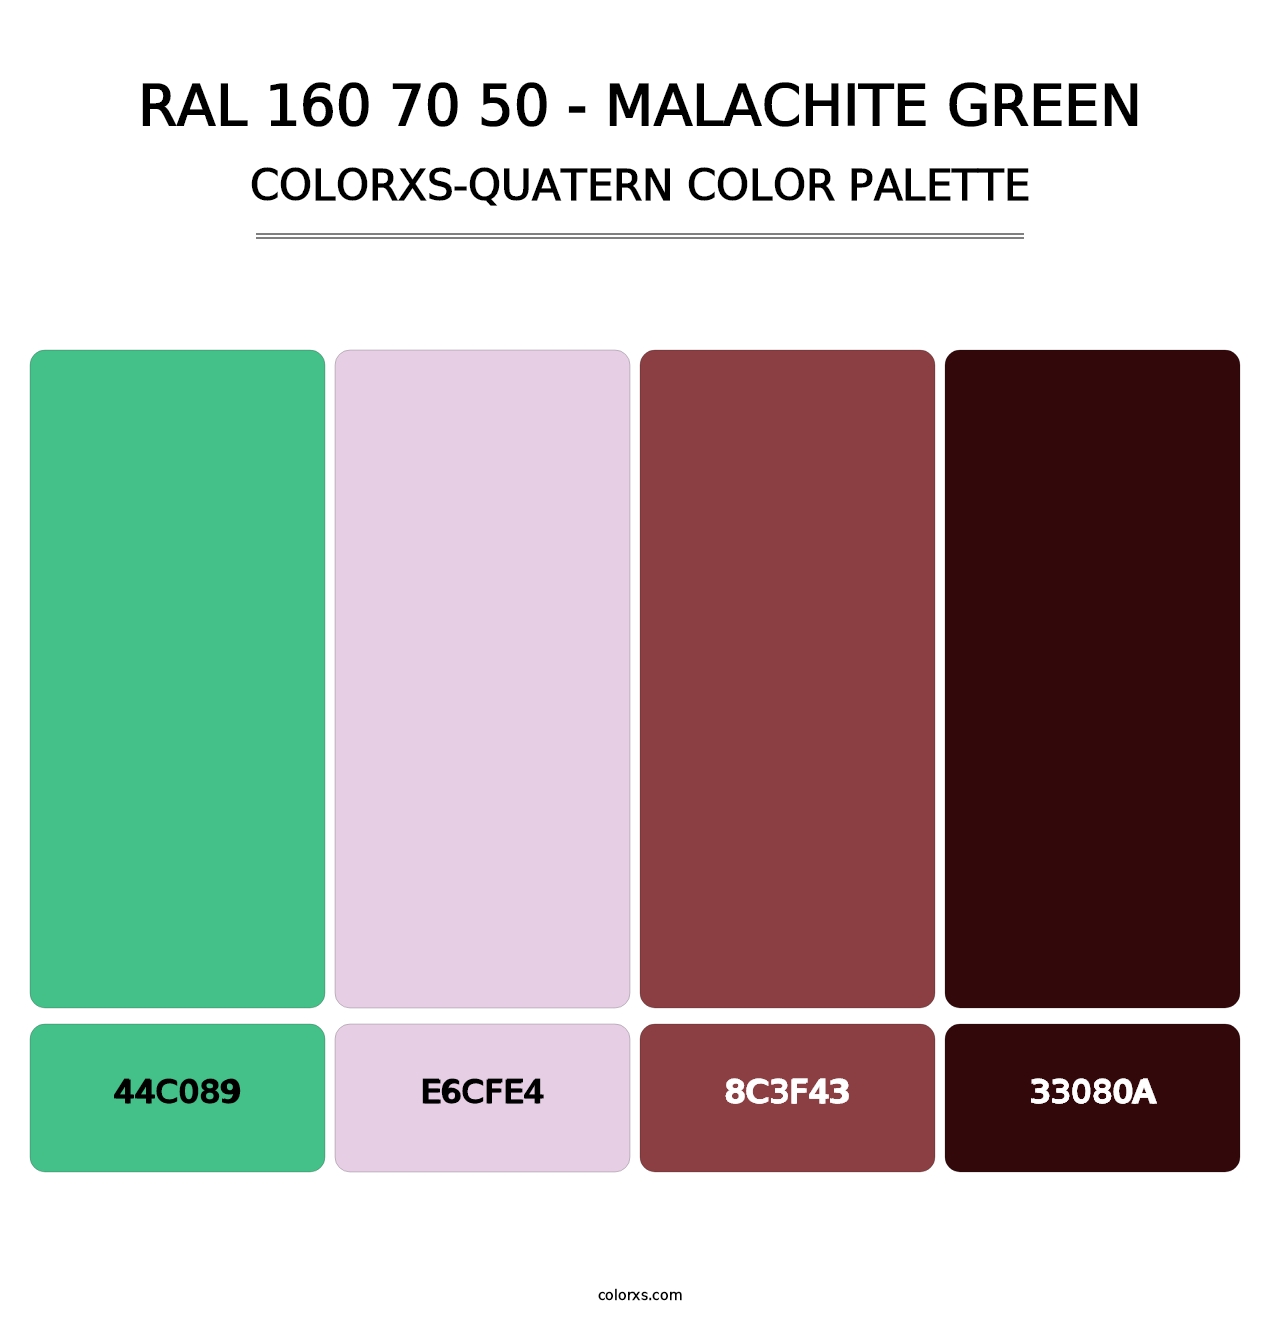 RAL 160 70 50 - Malachite Green - Colorxs Quatern Palette